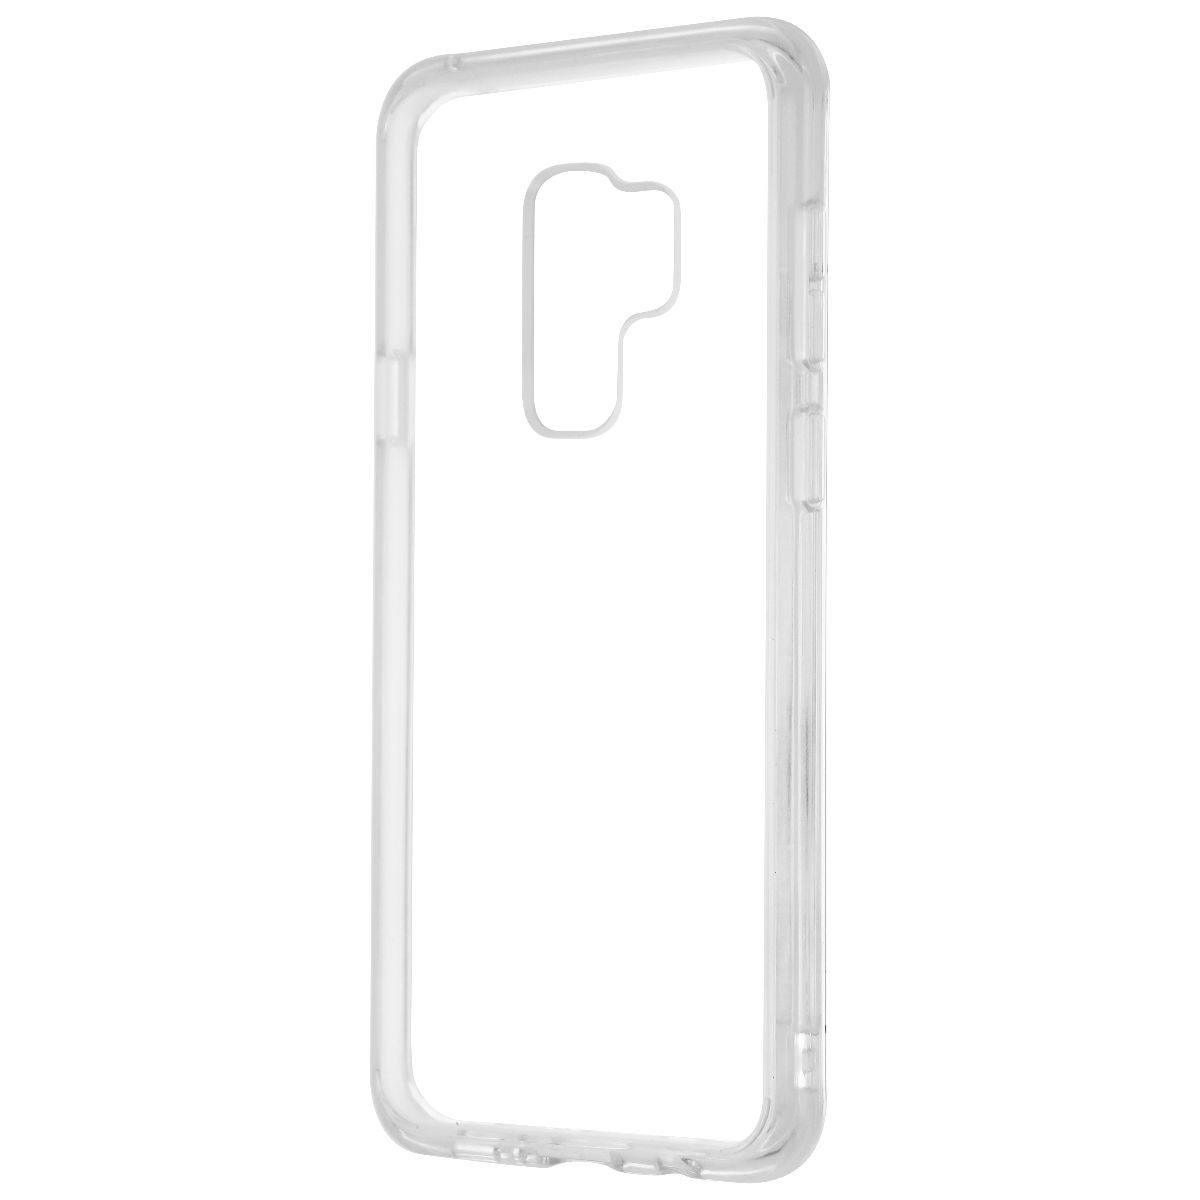 UBREAKIFIX Slim Hardshell Case For Samsung Galaxy S9+ Smartphones - Clear